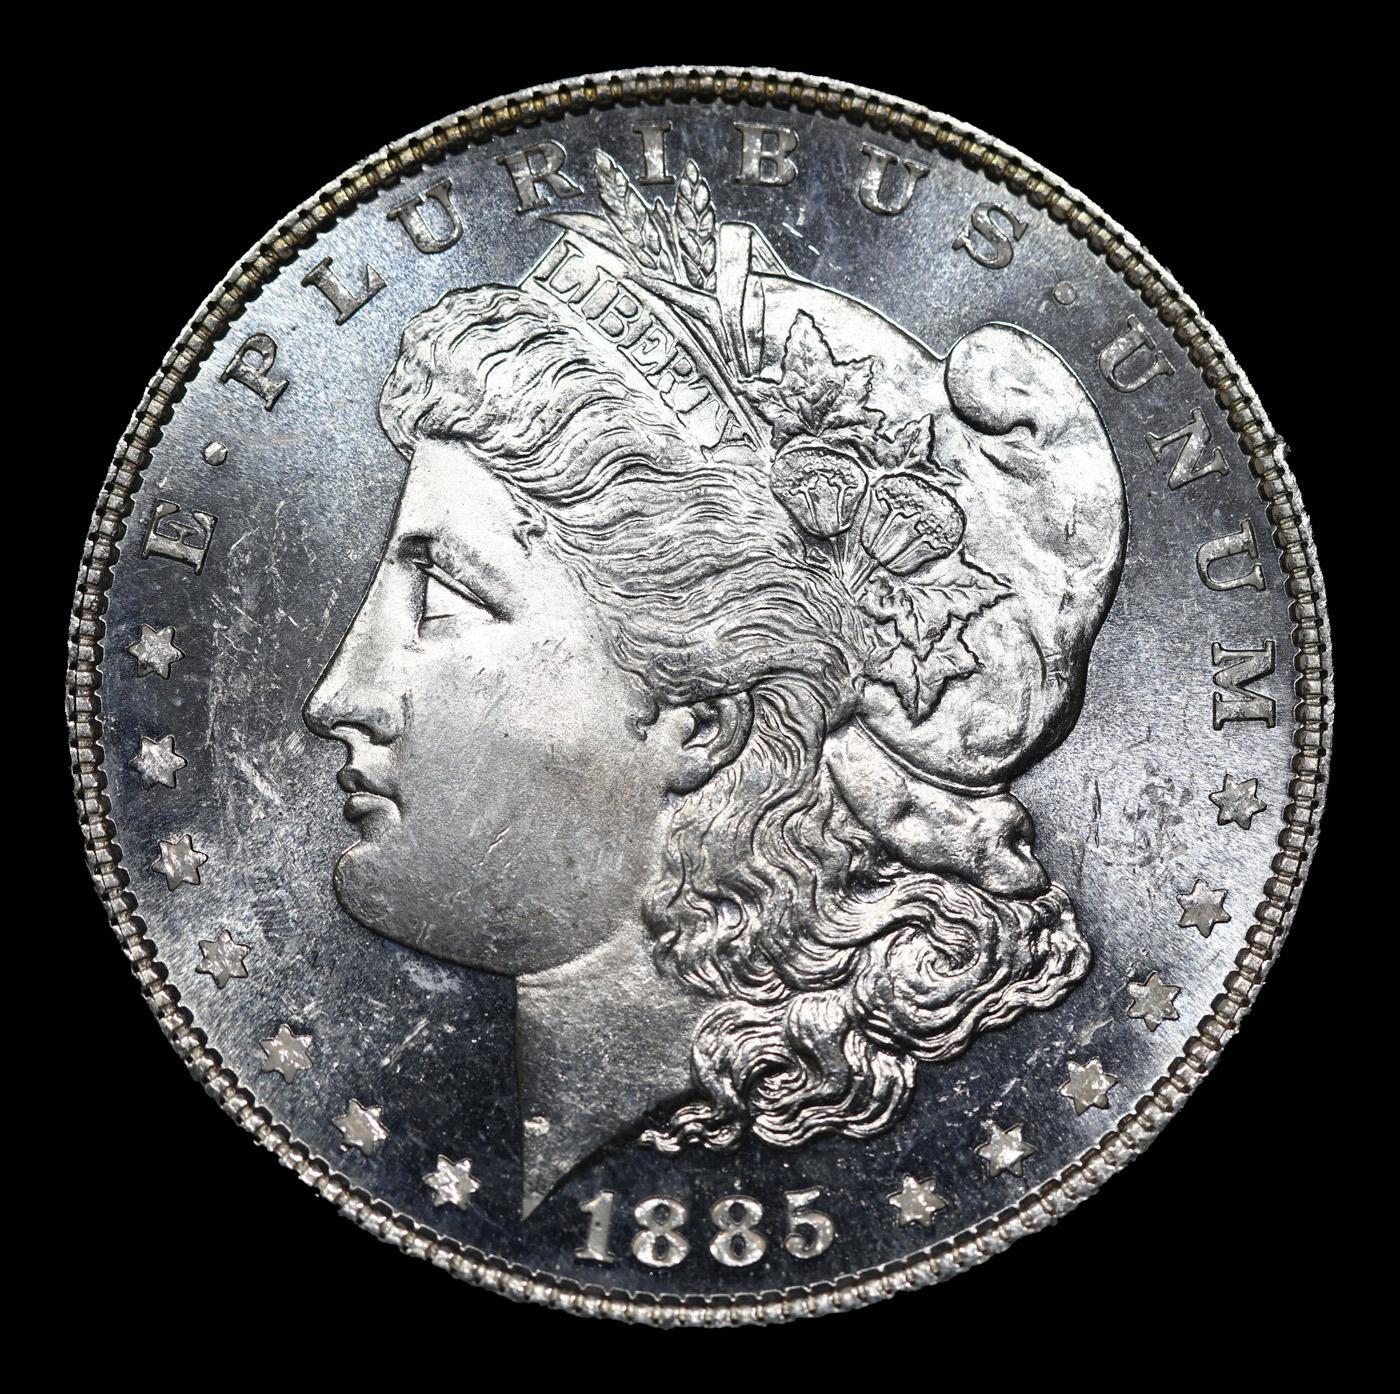 ***Auction Highlight*** 1885-p Morgan Dollar Near Top Pop! $1 Graded ms66 DMPL By SEGS (fc)